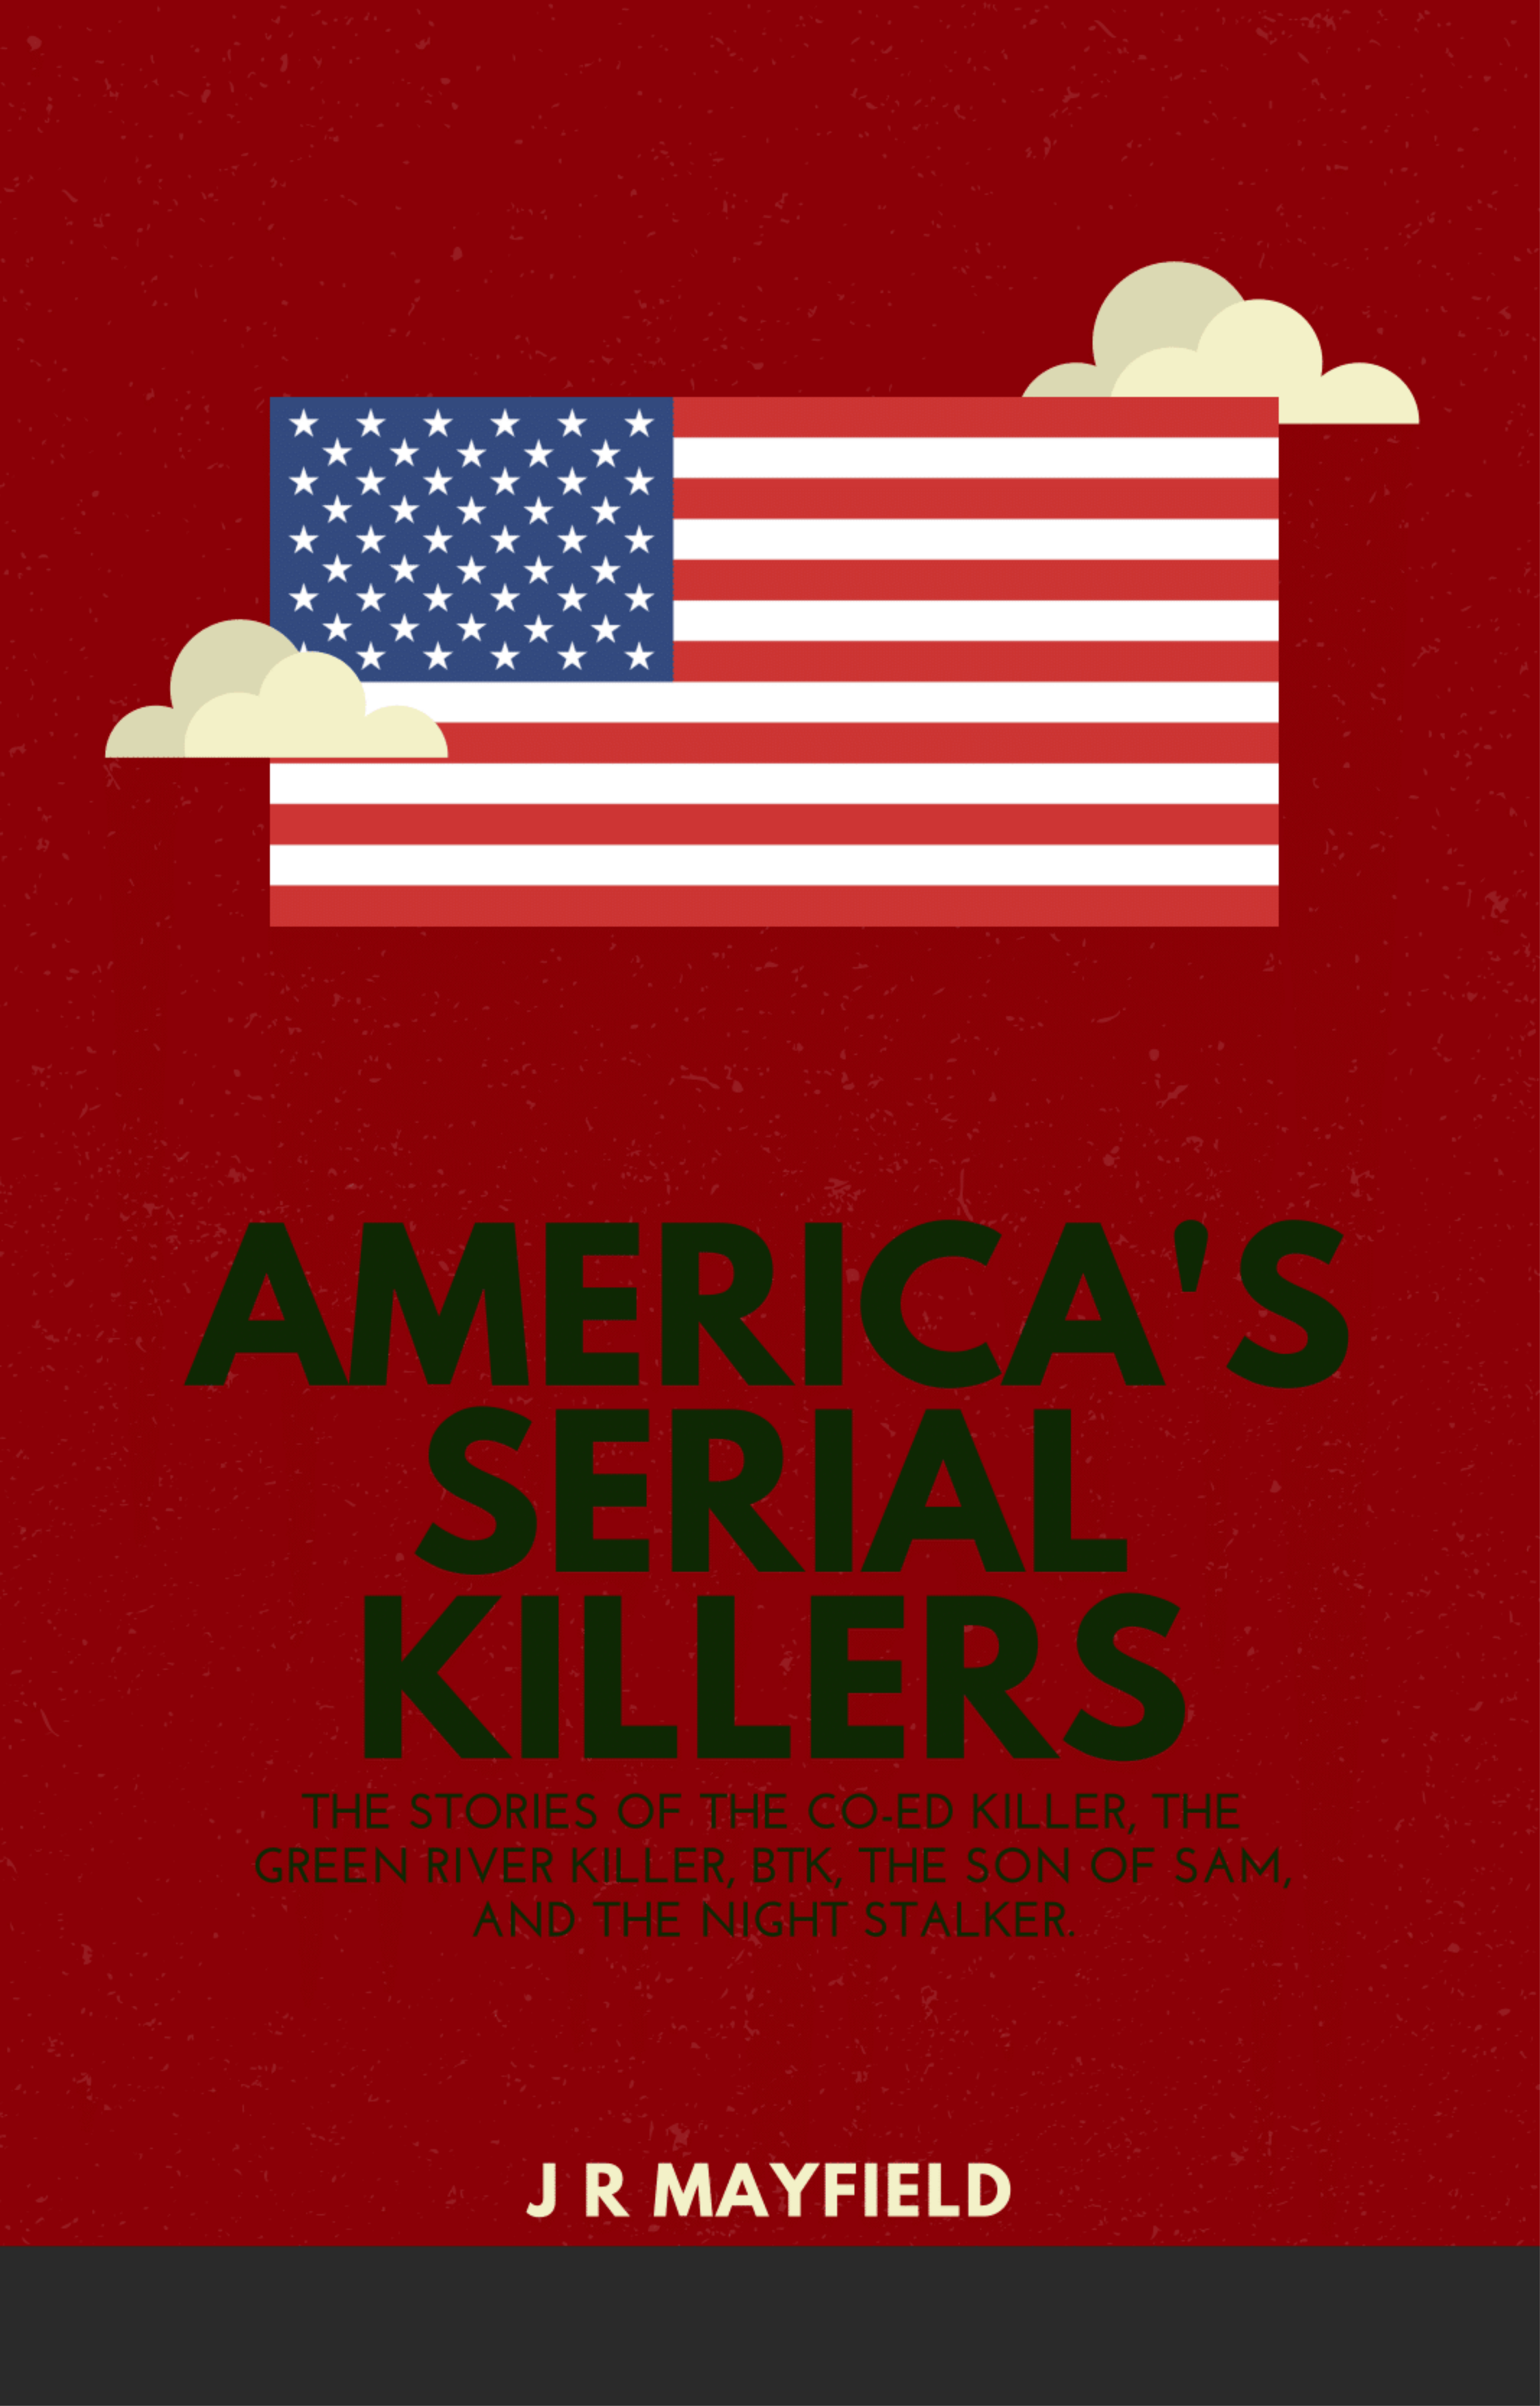 FREE: America’s Serial Killer by J R Mayfield